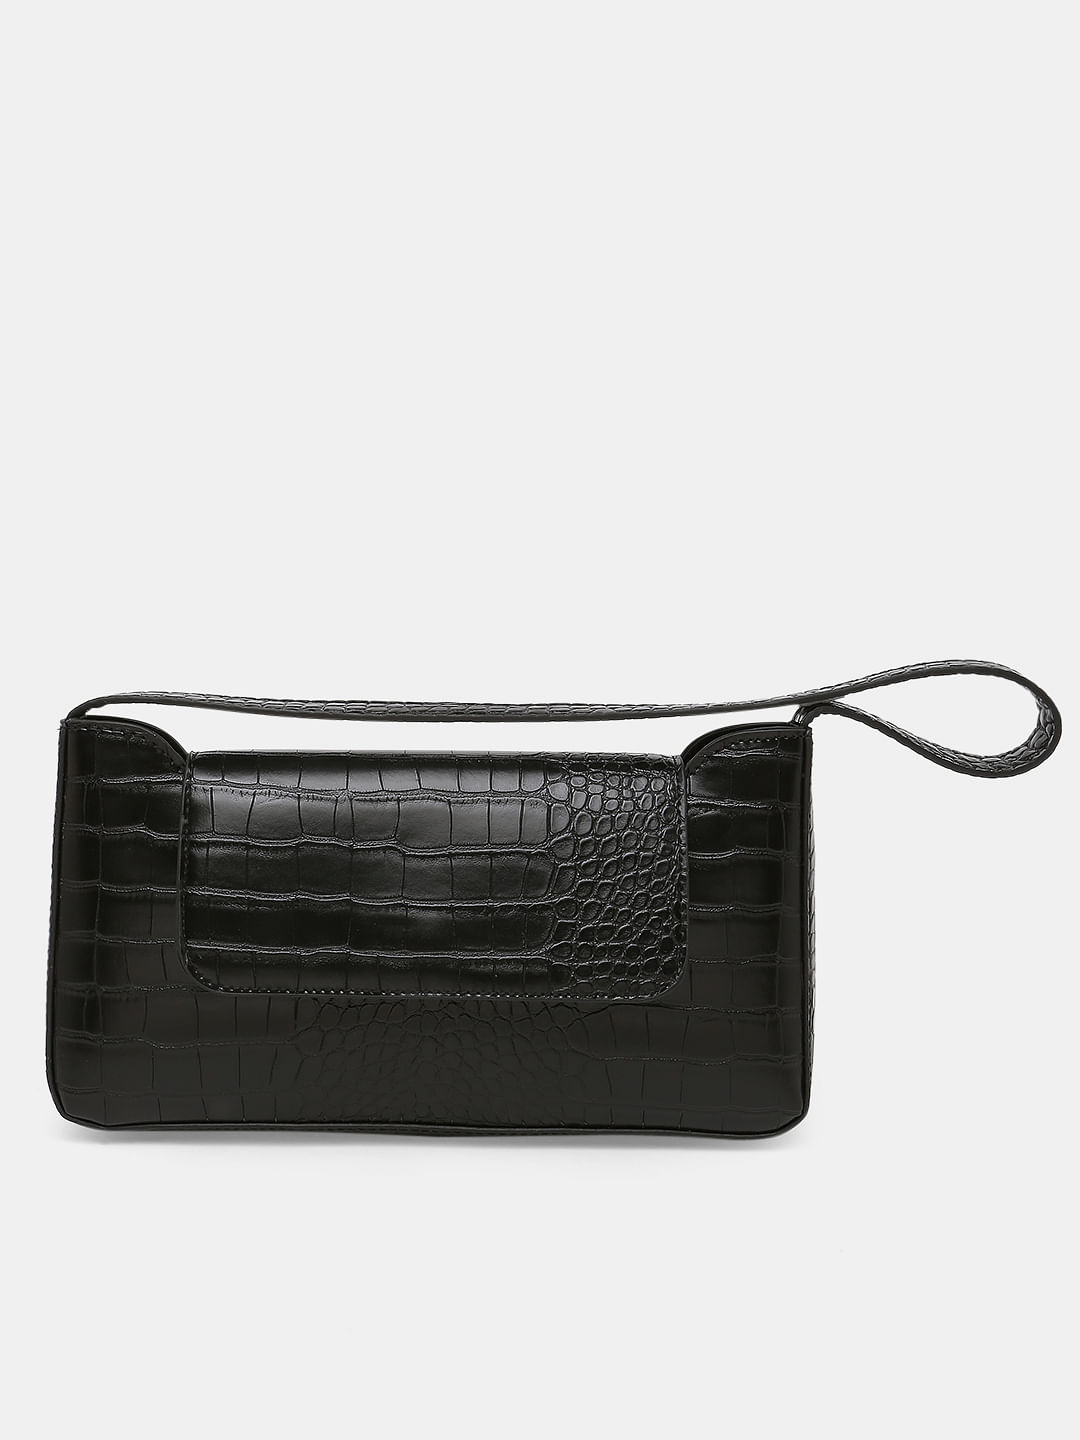 Genuine Leather Handbag Boston Bag Crossbody Bag Shoulder Bag Purse Fo